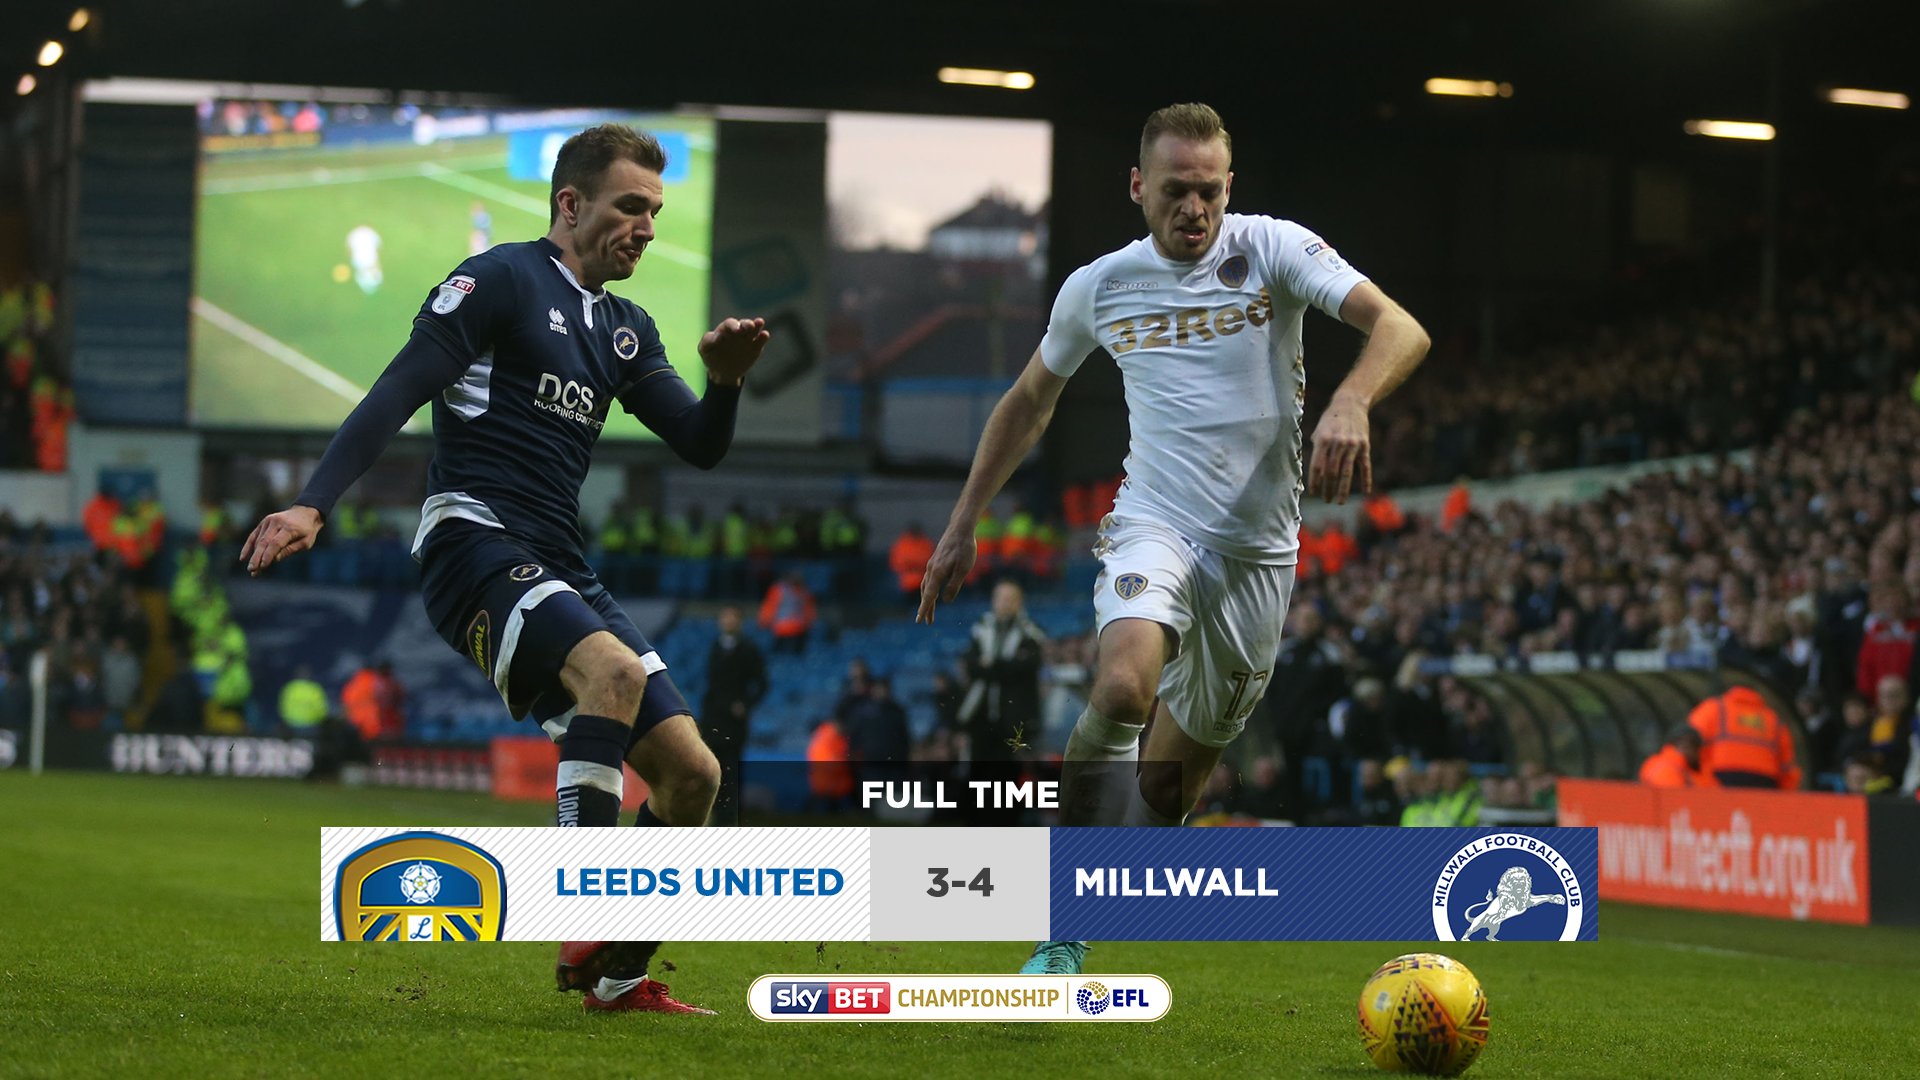 Millwall 2-1 Leeds United highlights: second-half comeback falls short as  Whites rue Berardi red card - Leeds Live